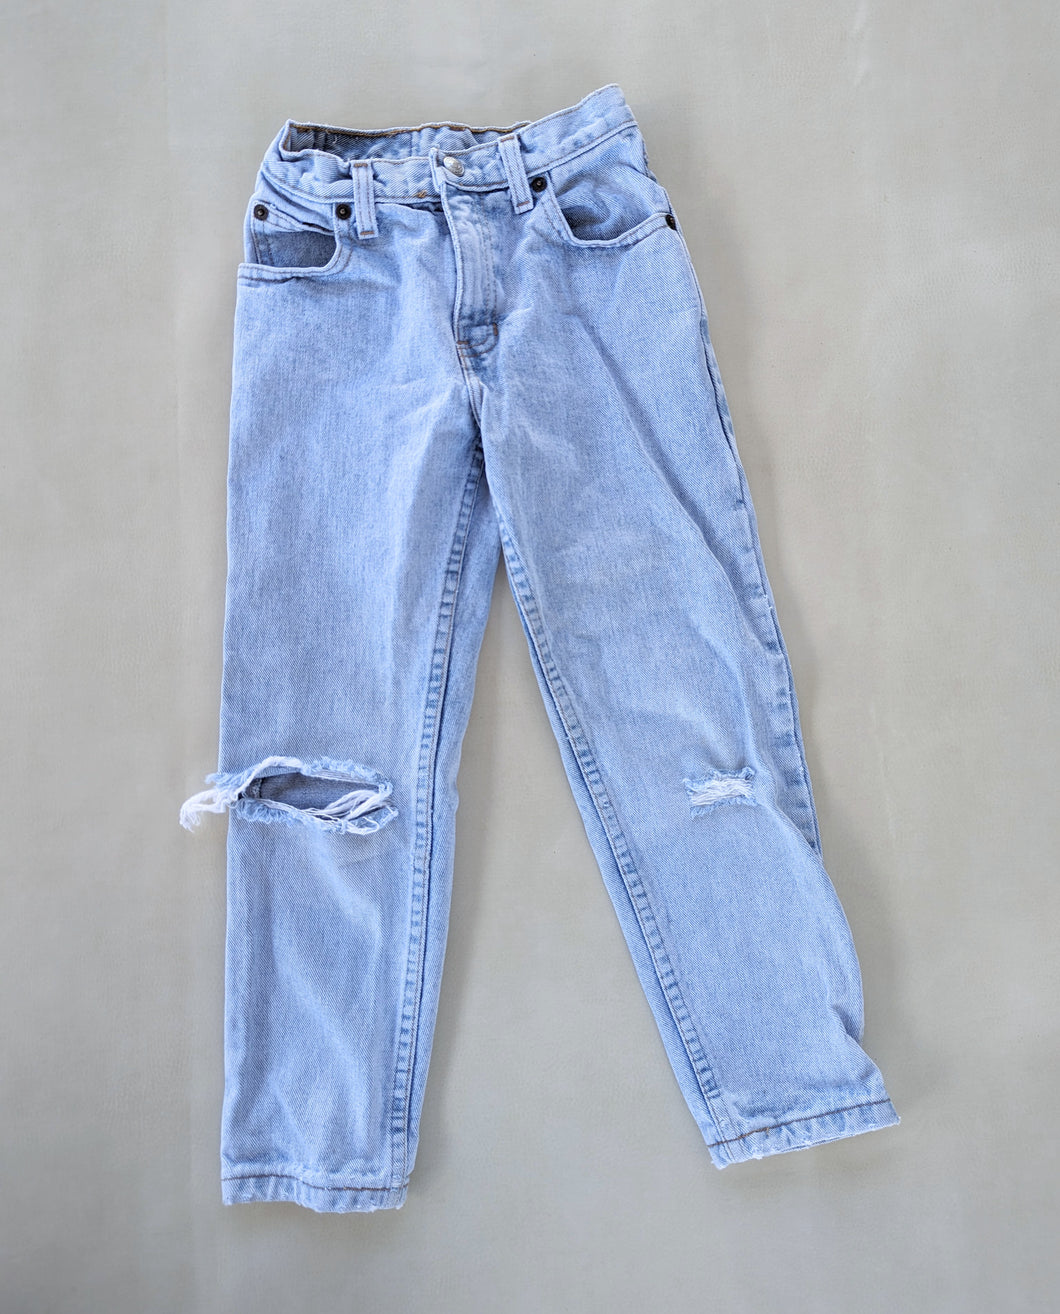 Gap Distressed Jeans 6 Slim